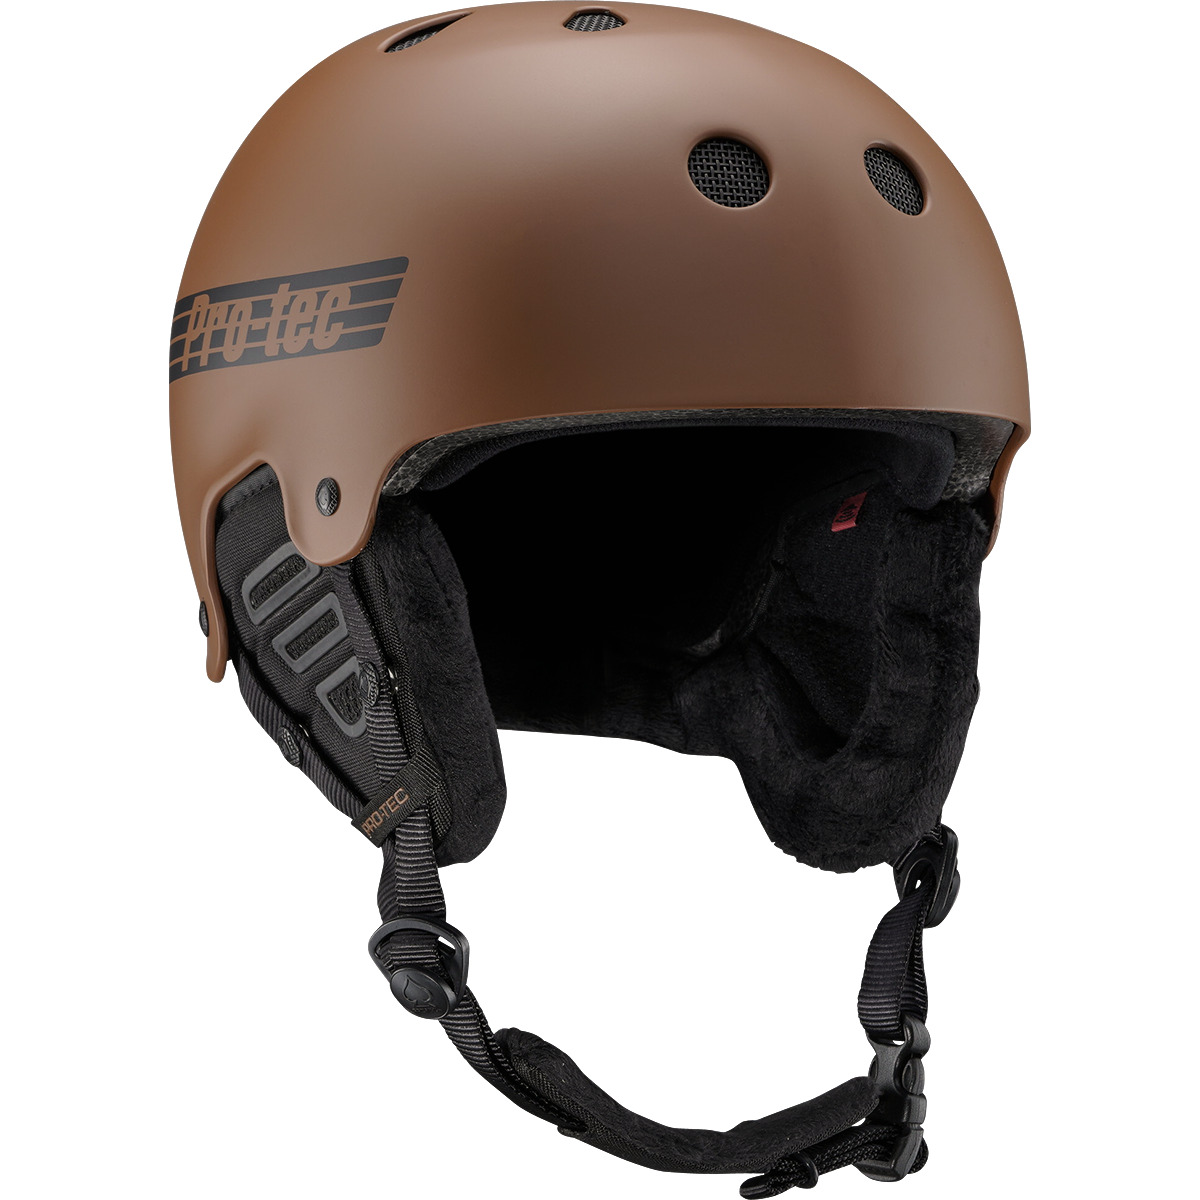 Pro-Tec SS20 Skate Helmet & Protection Preview - Boardsport SOURCE